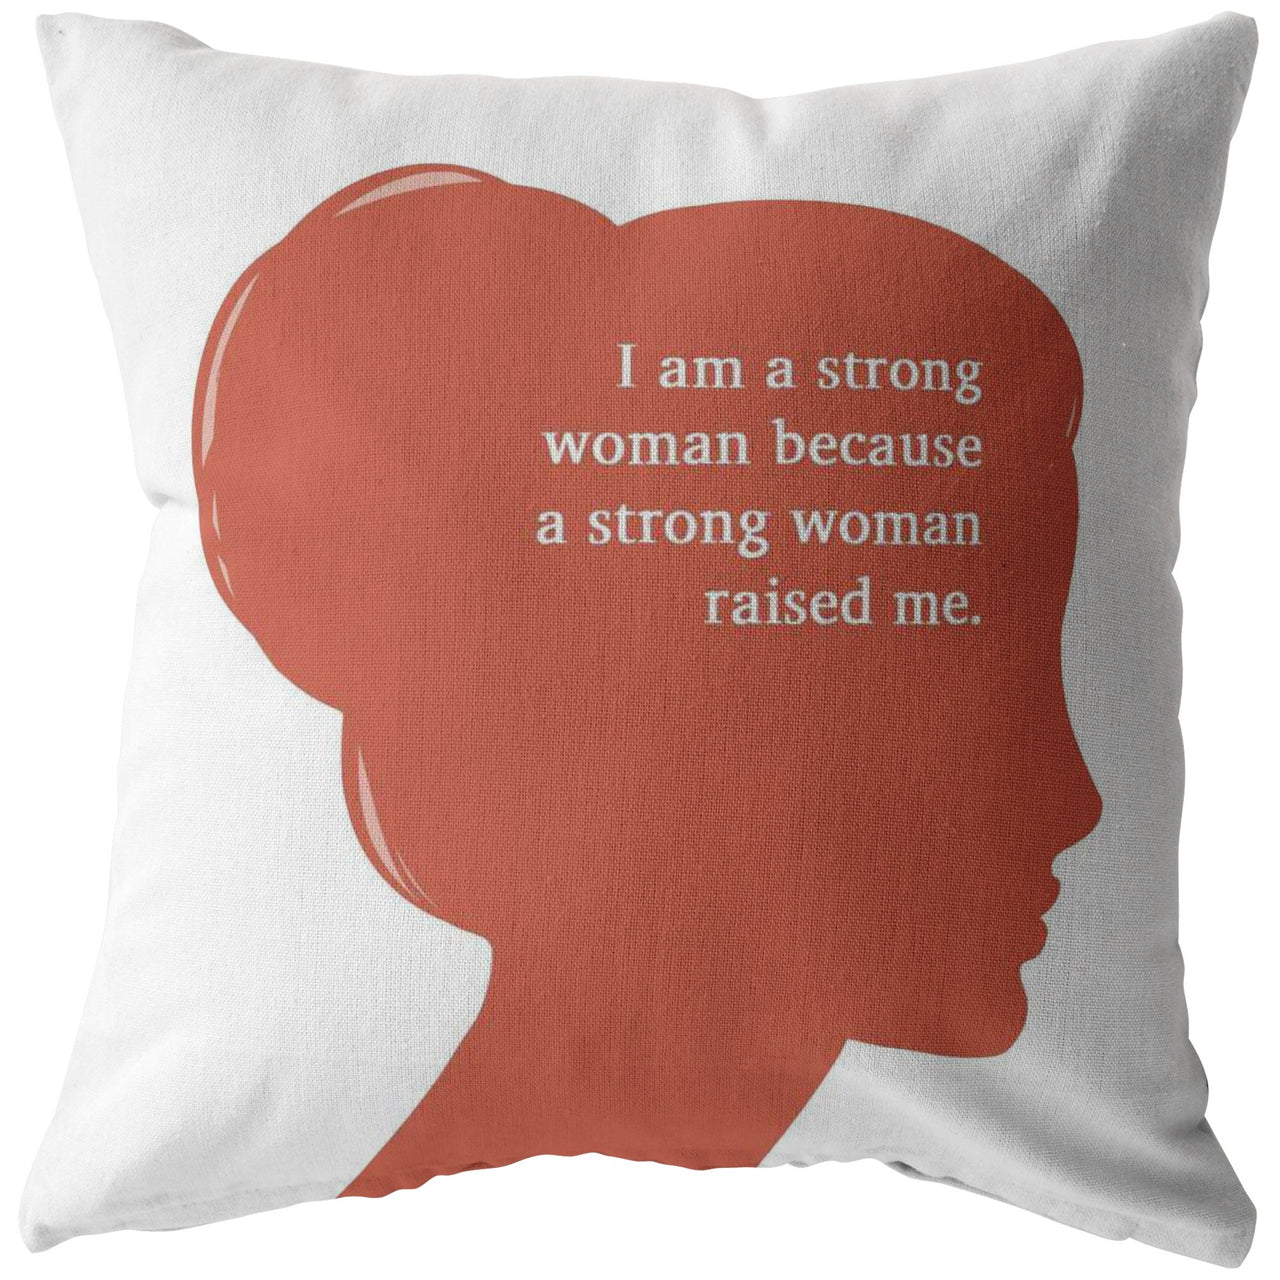 "A Strong Woman" Pillow